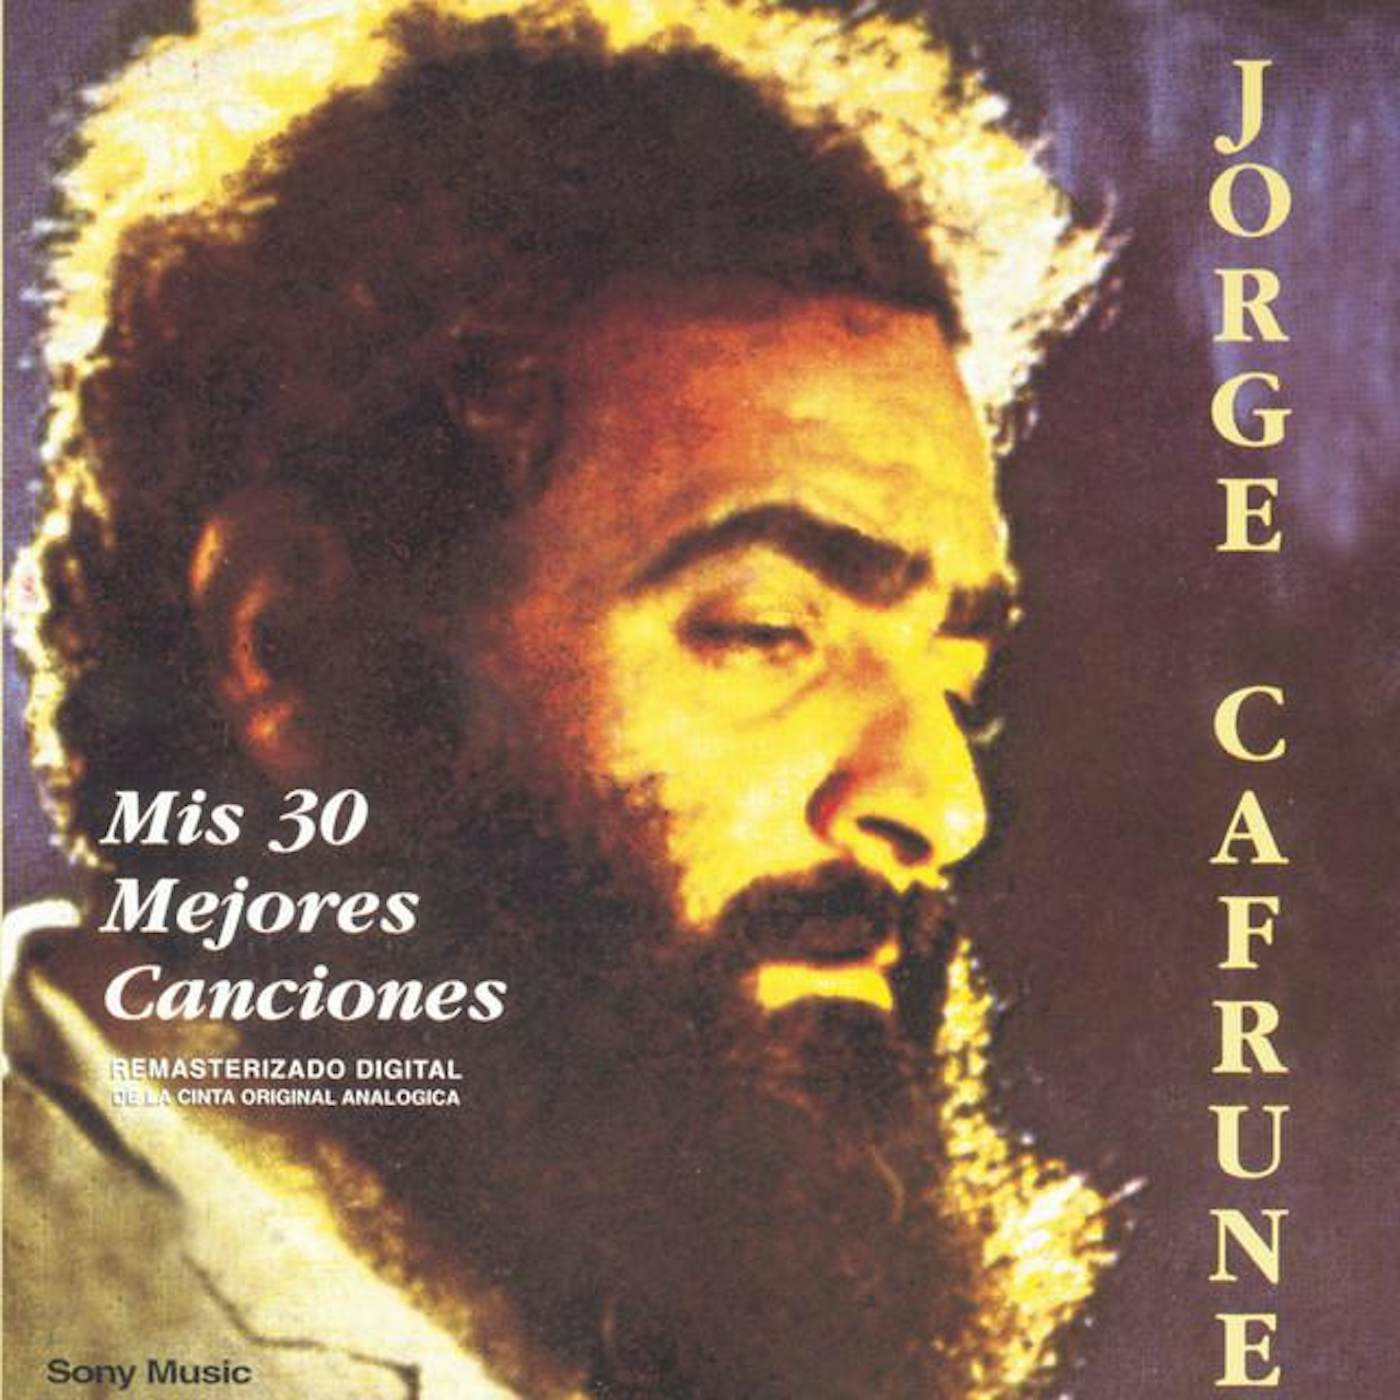 Jorge Cafrune